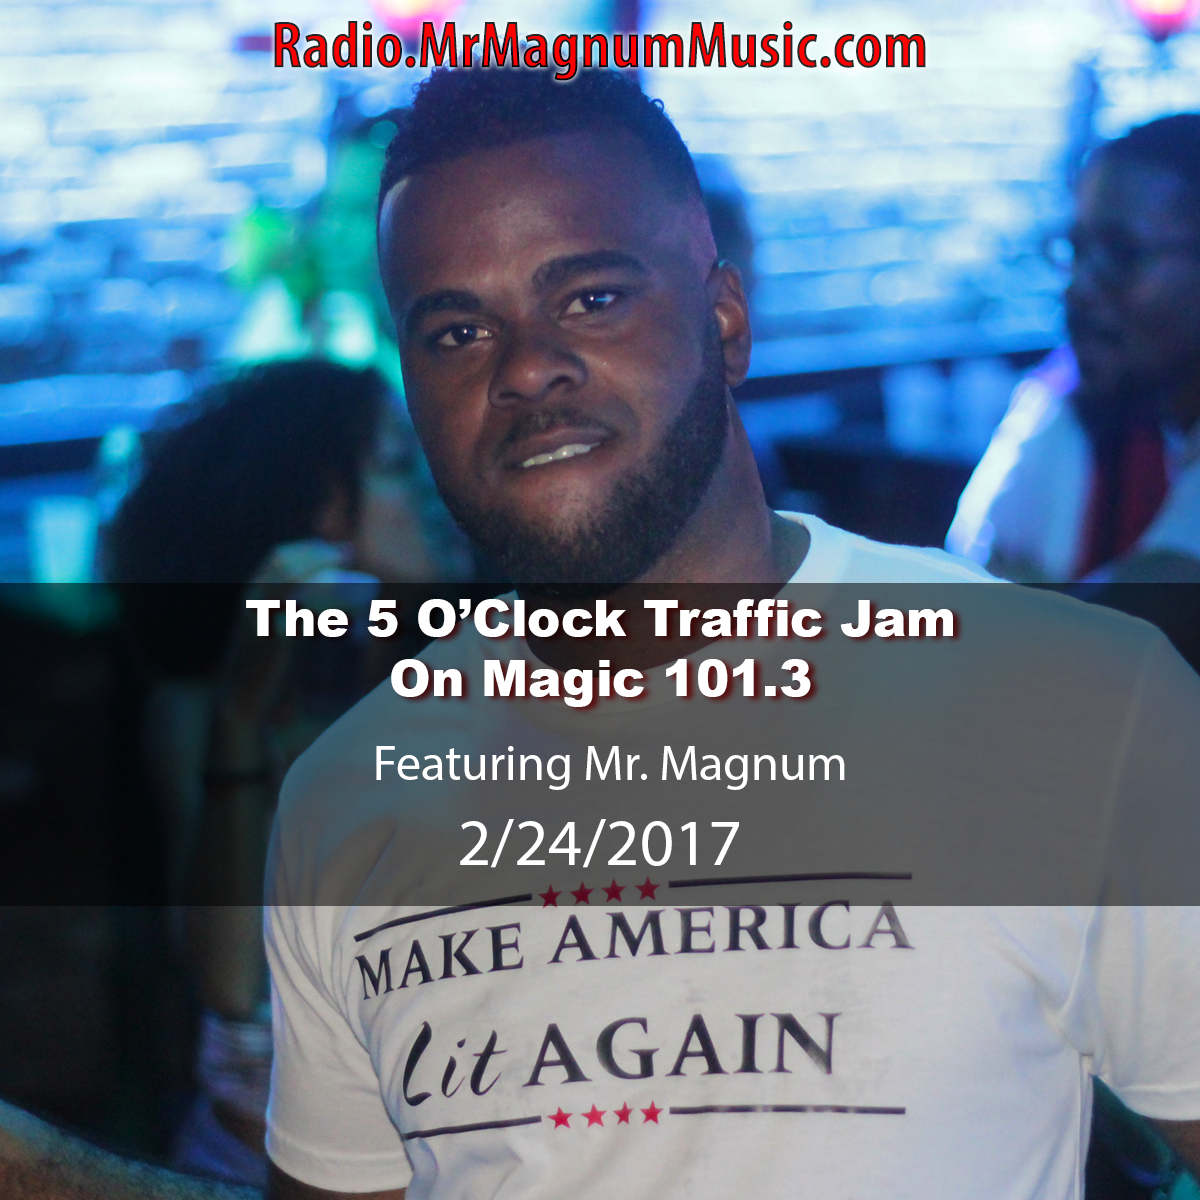 The 5 O’Clock Traffic Jam 2-24-2017 on Magic 101.3